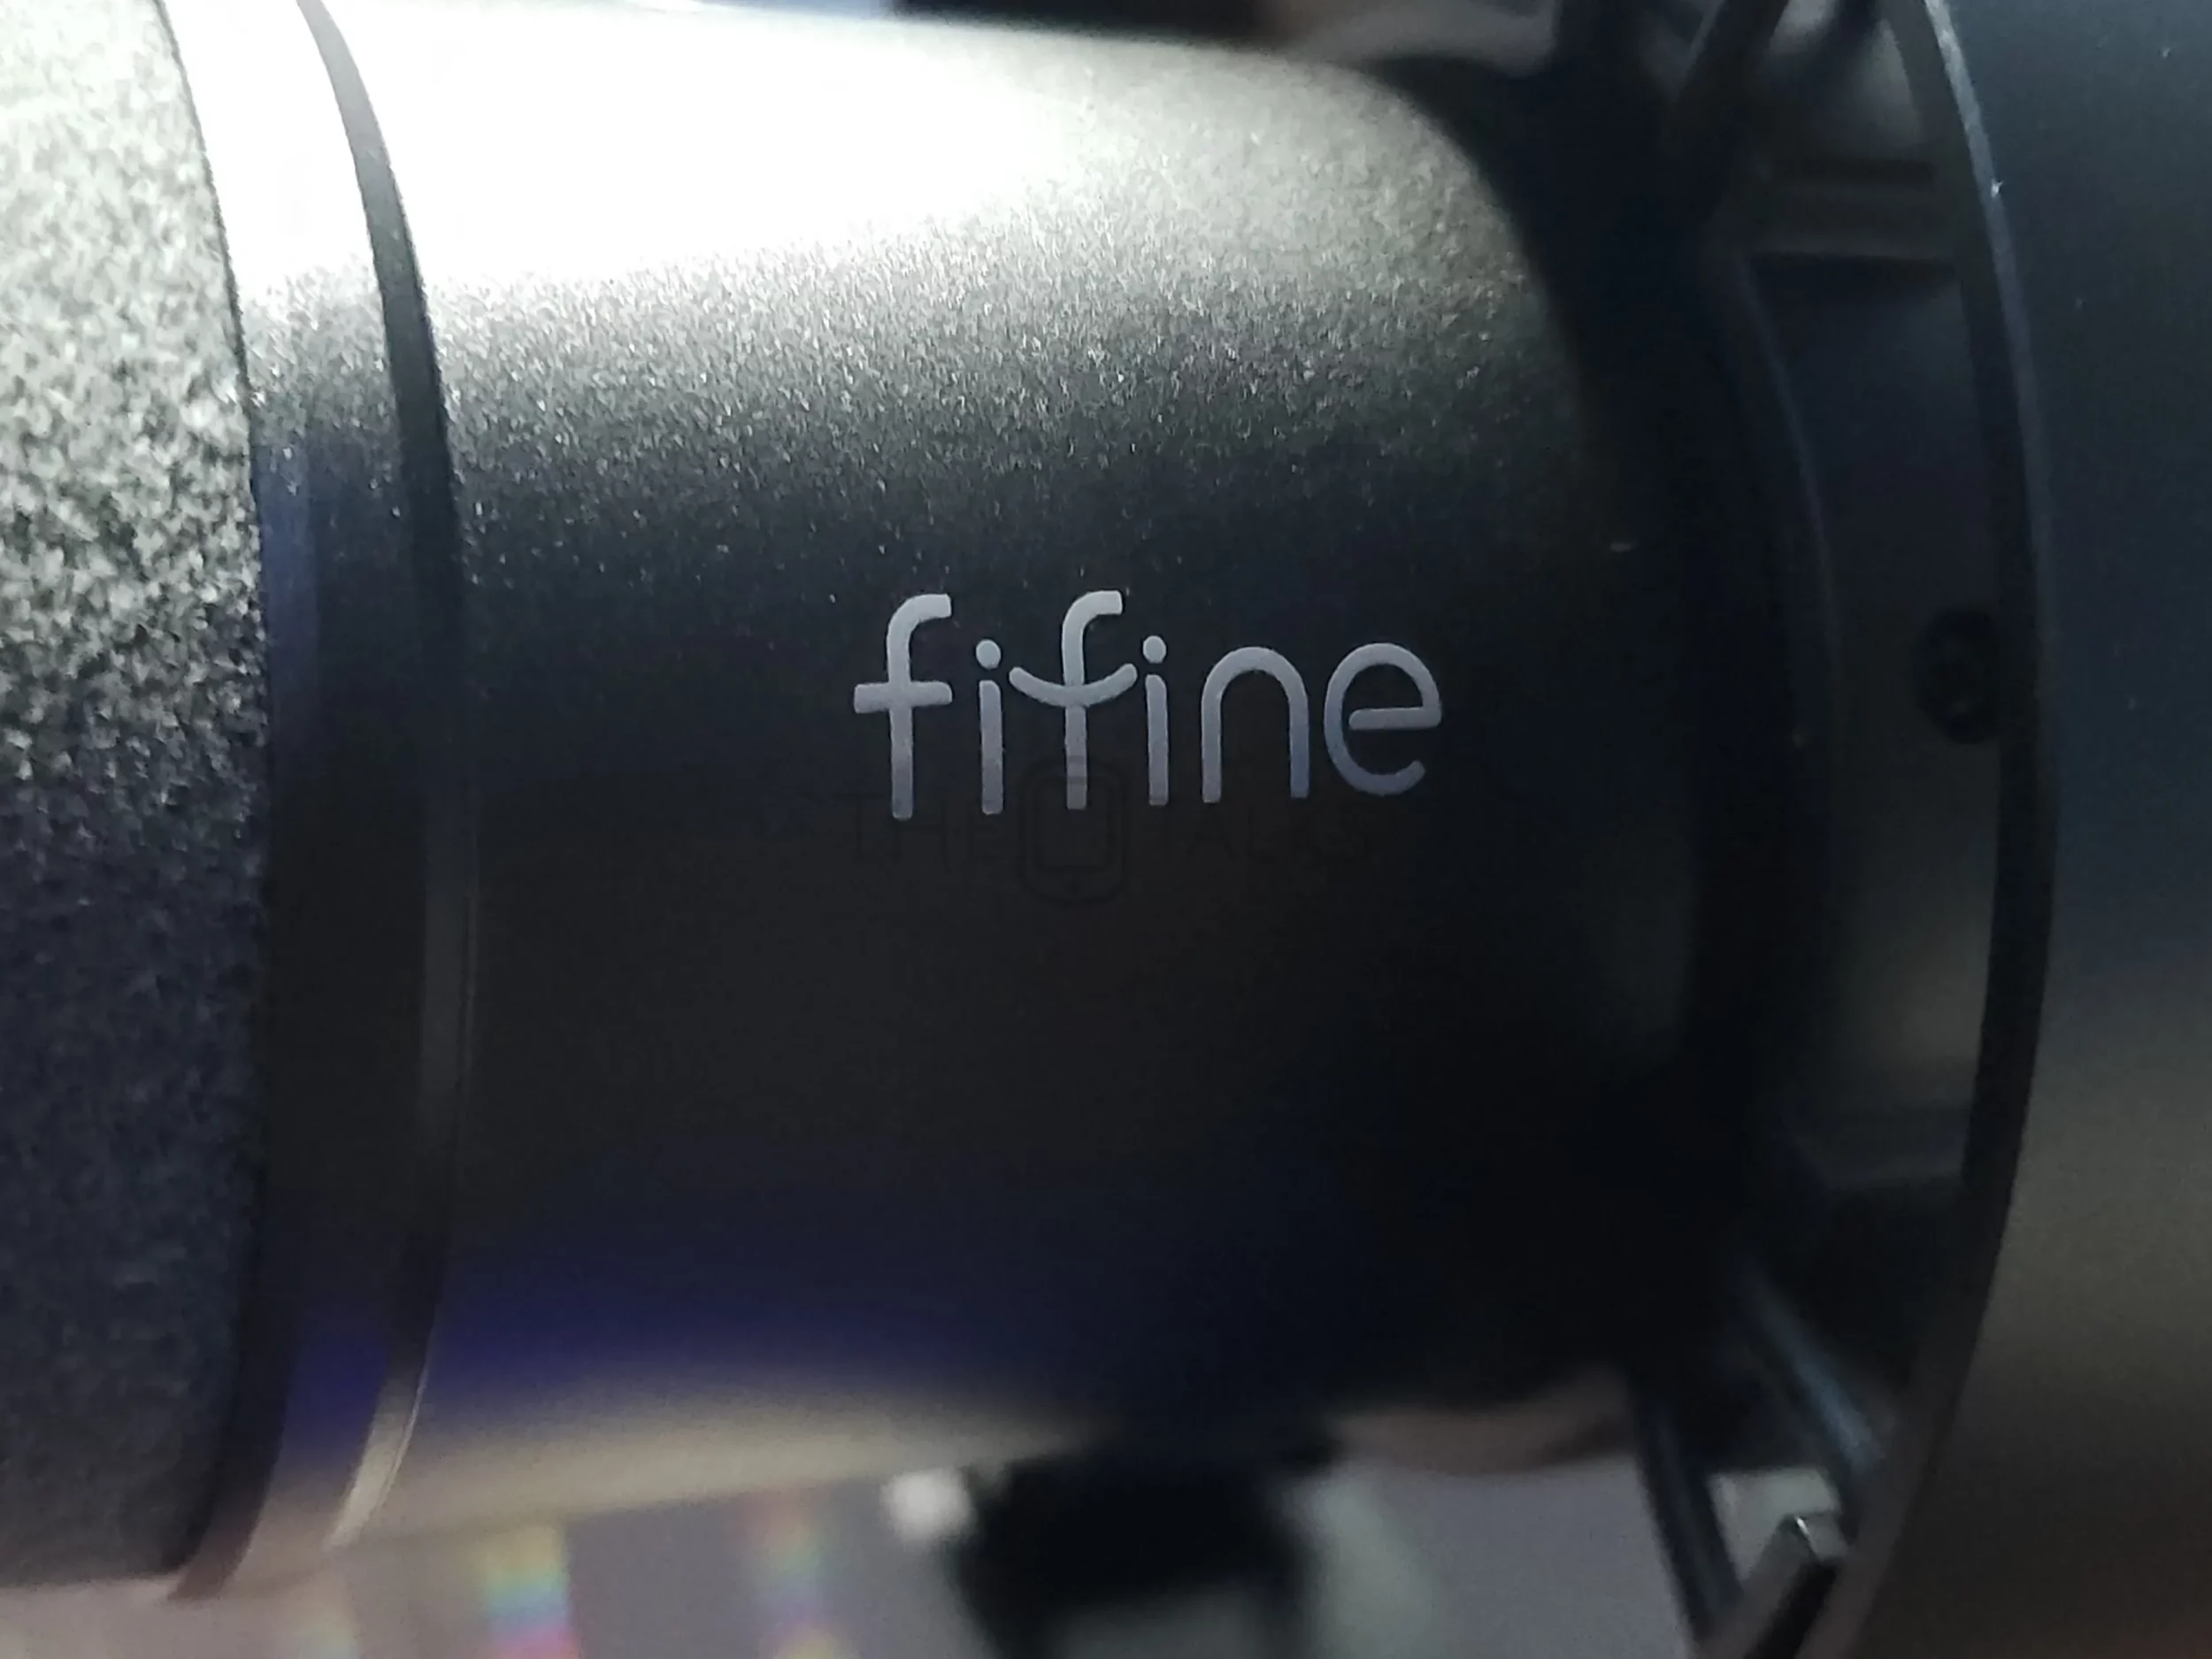 Fifine K688 review - fifine logo